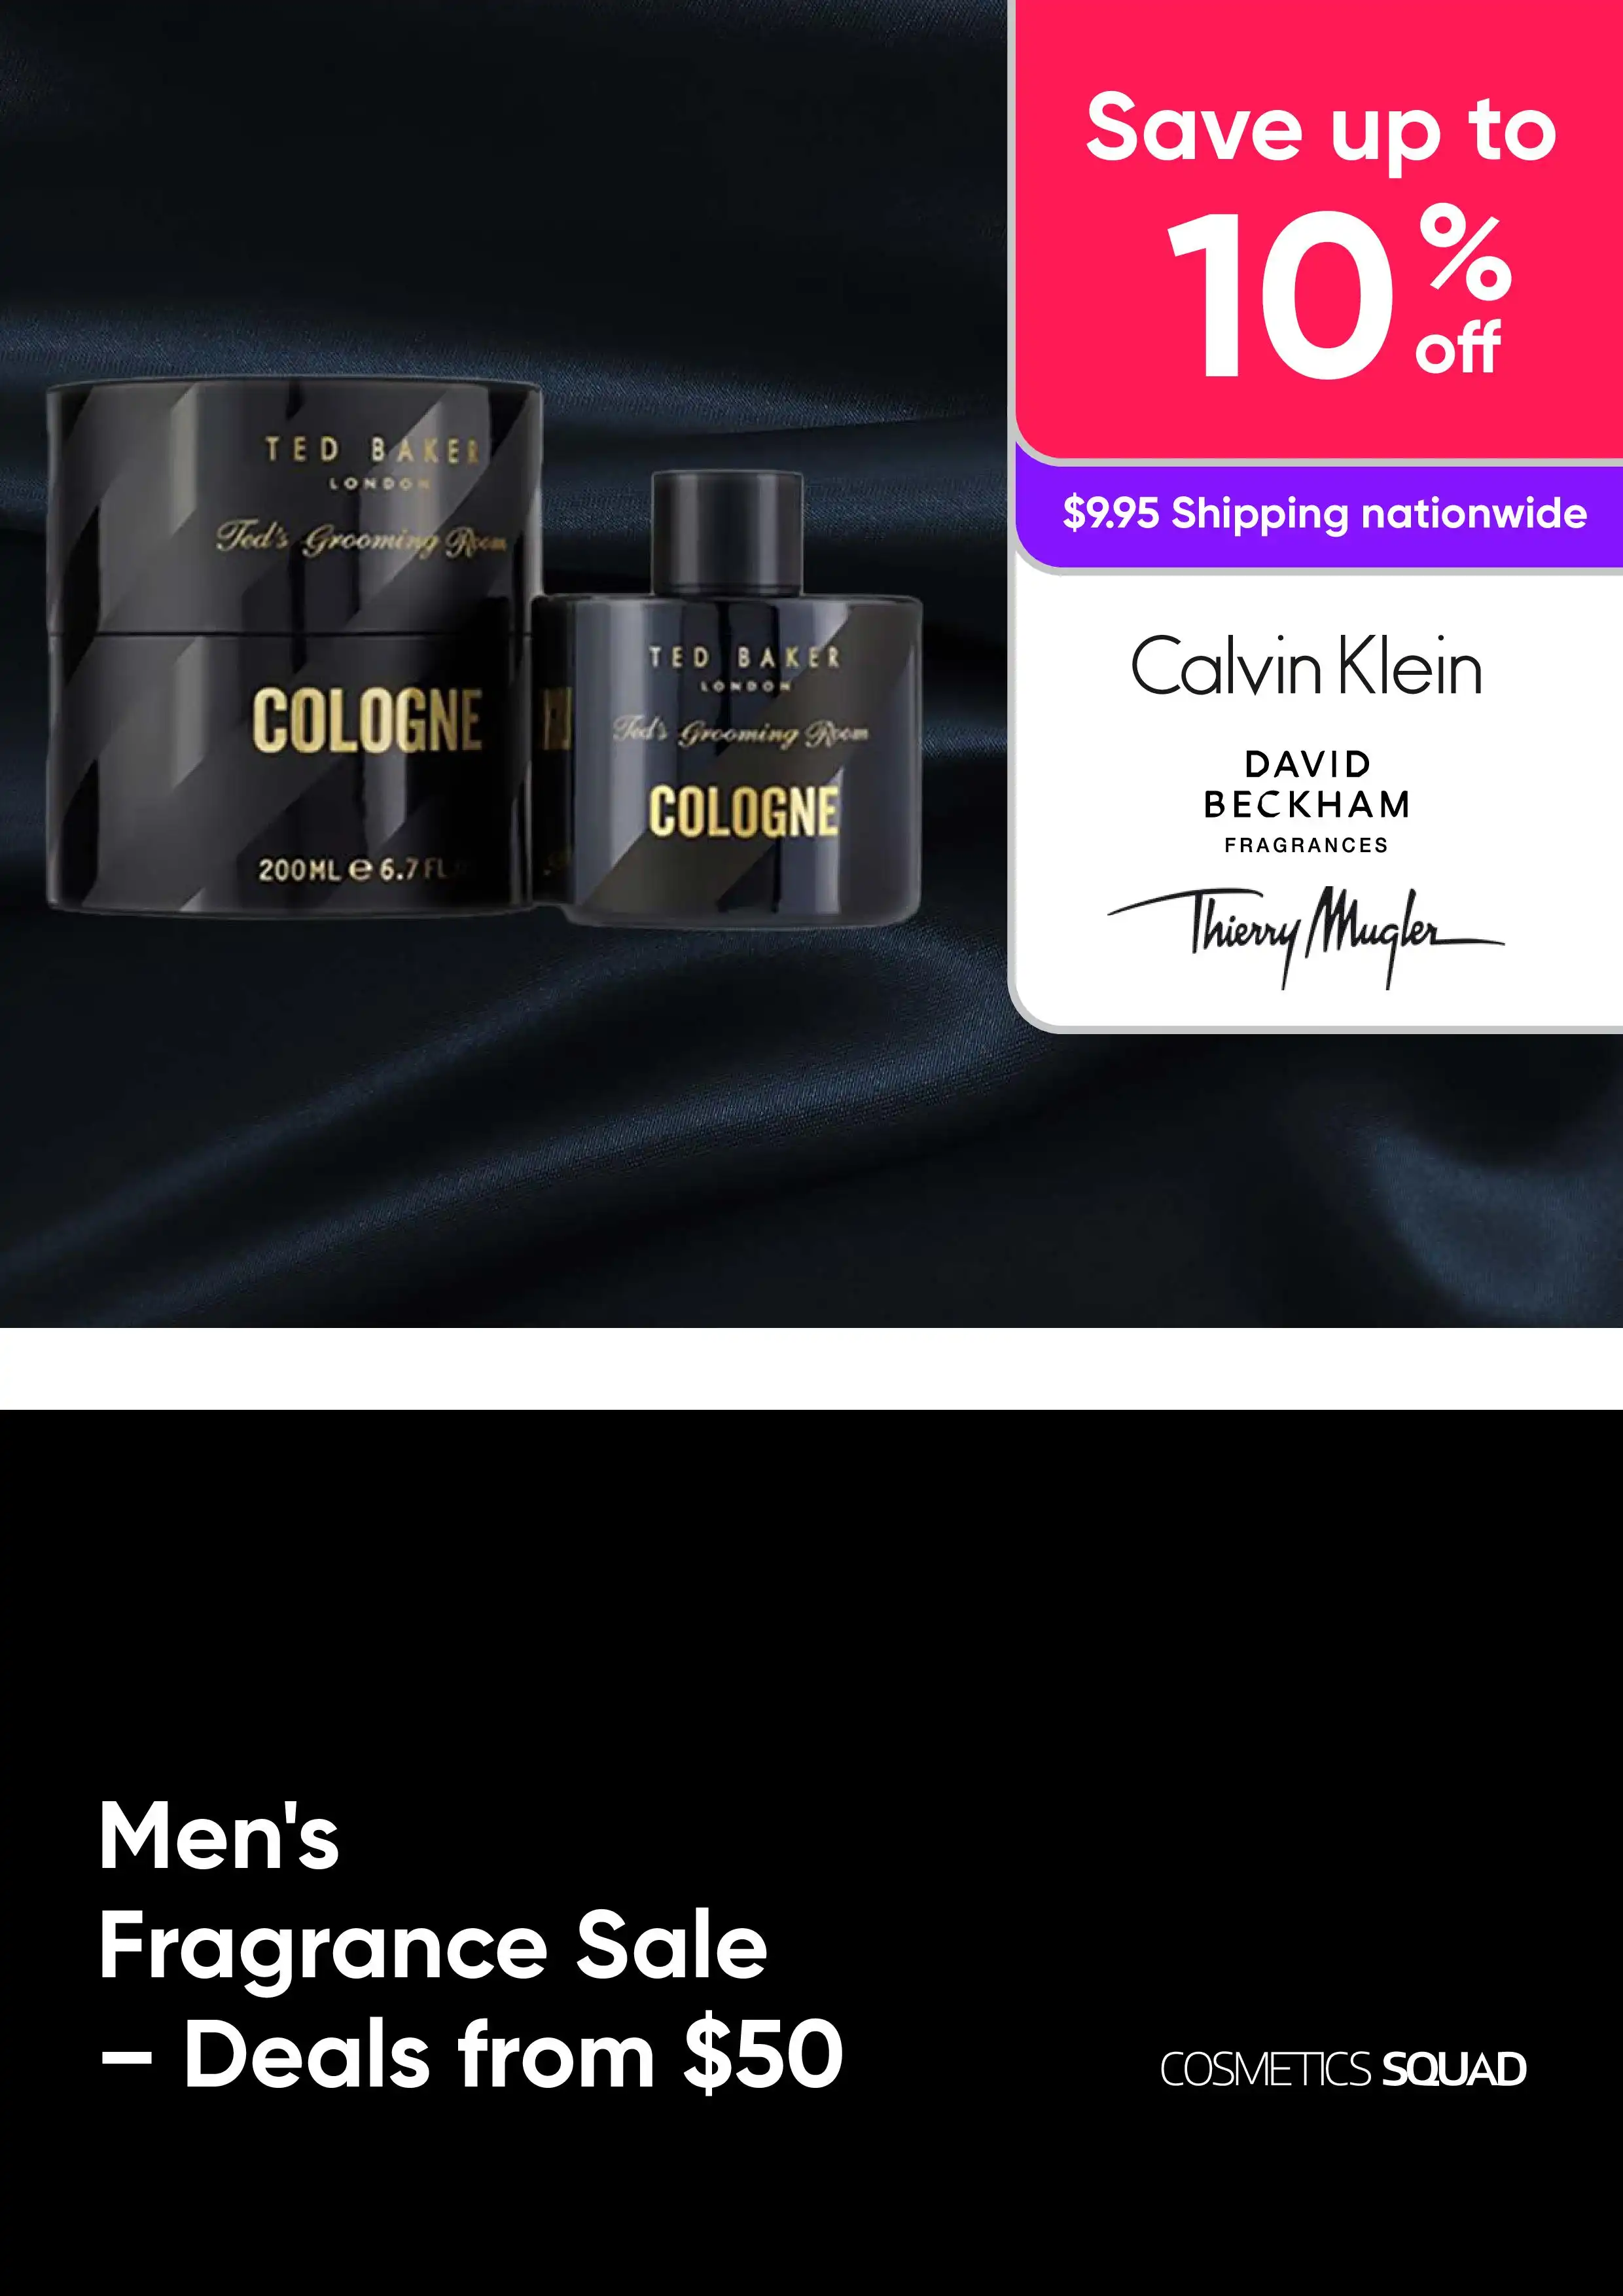 Men's Fragrance Sale – Calvin Klein, David Beckham, Thierry Mugler - Deals from $50